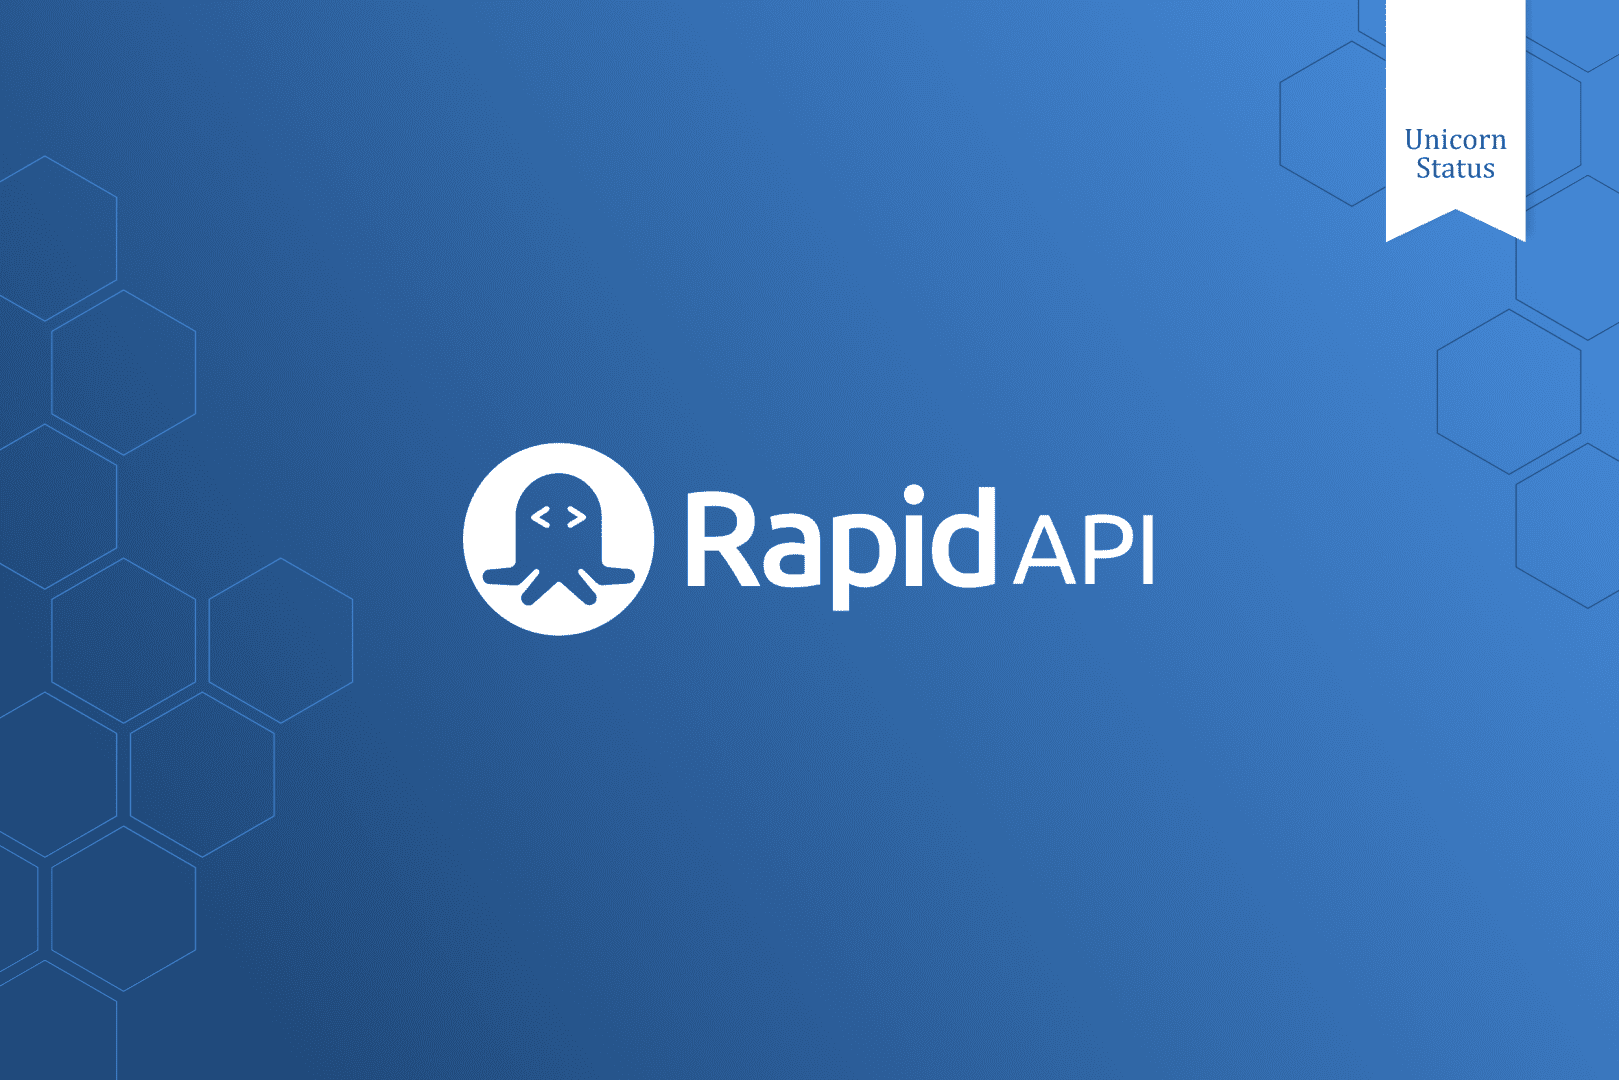 Rapid API logo with Unicorn Status ribbon